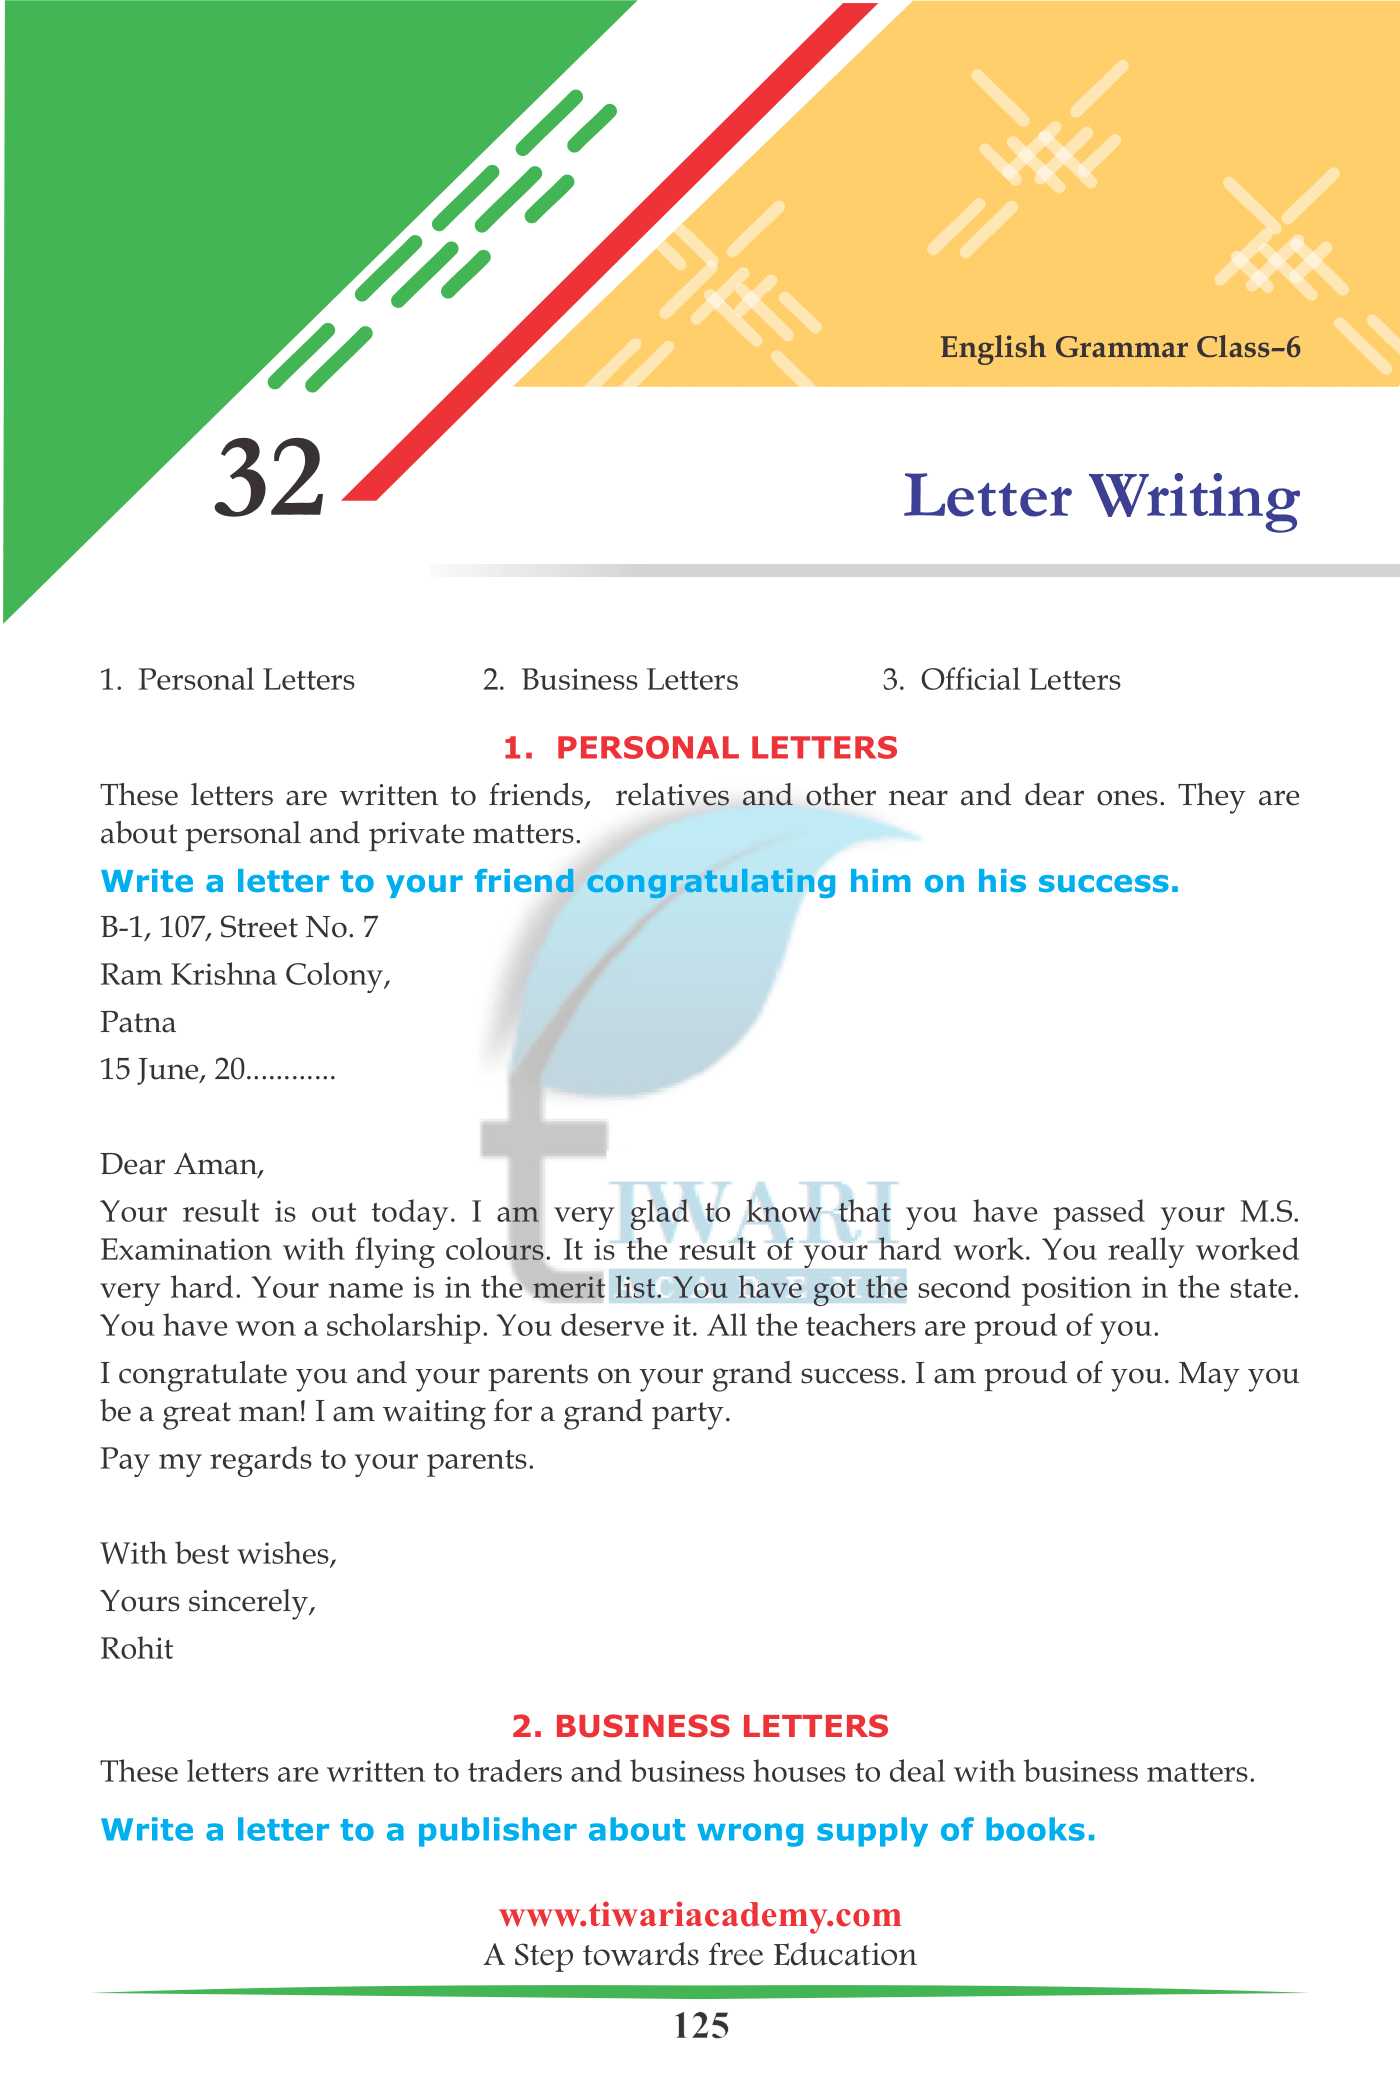 6th English Grammar Letter Writing